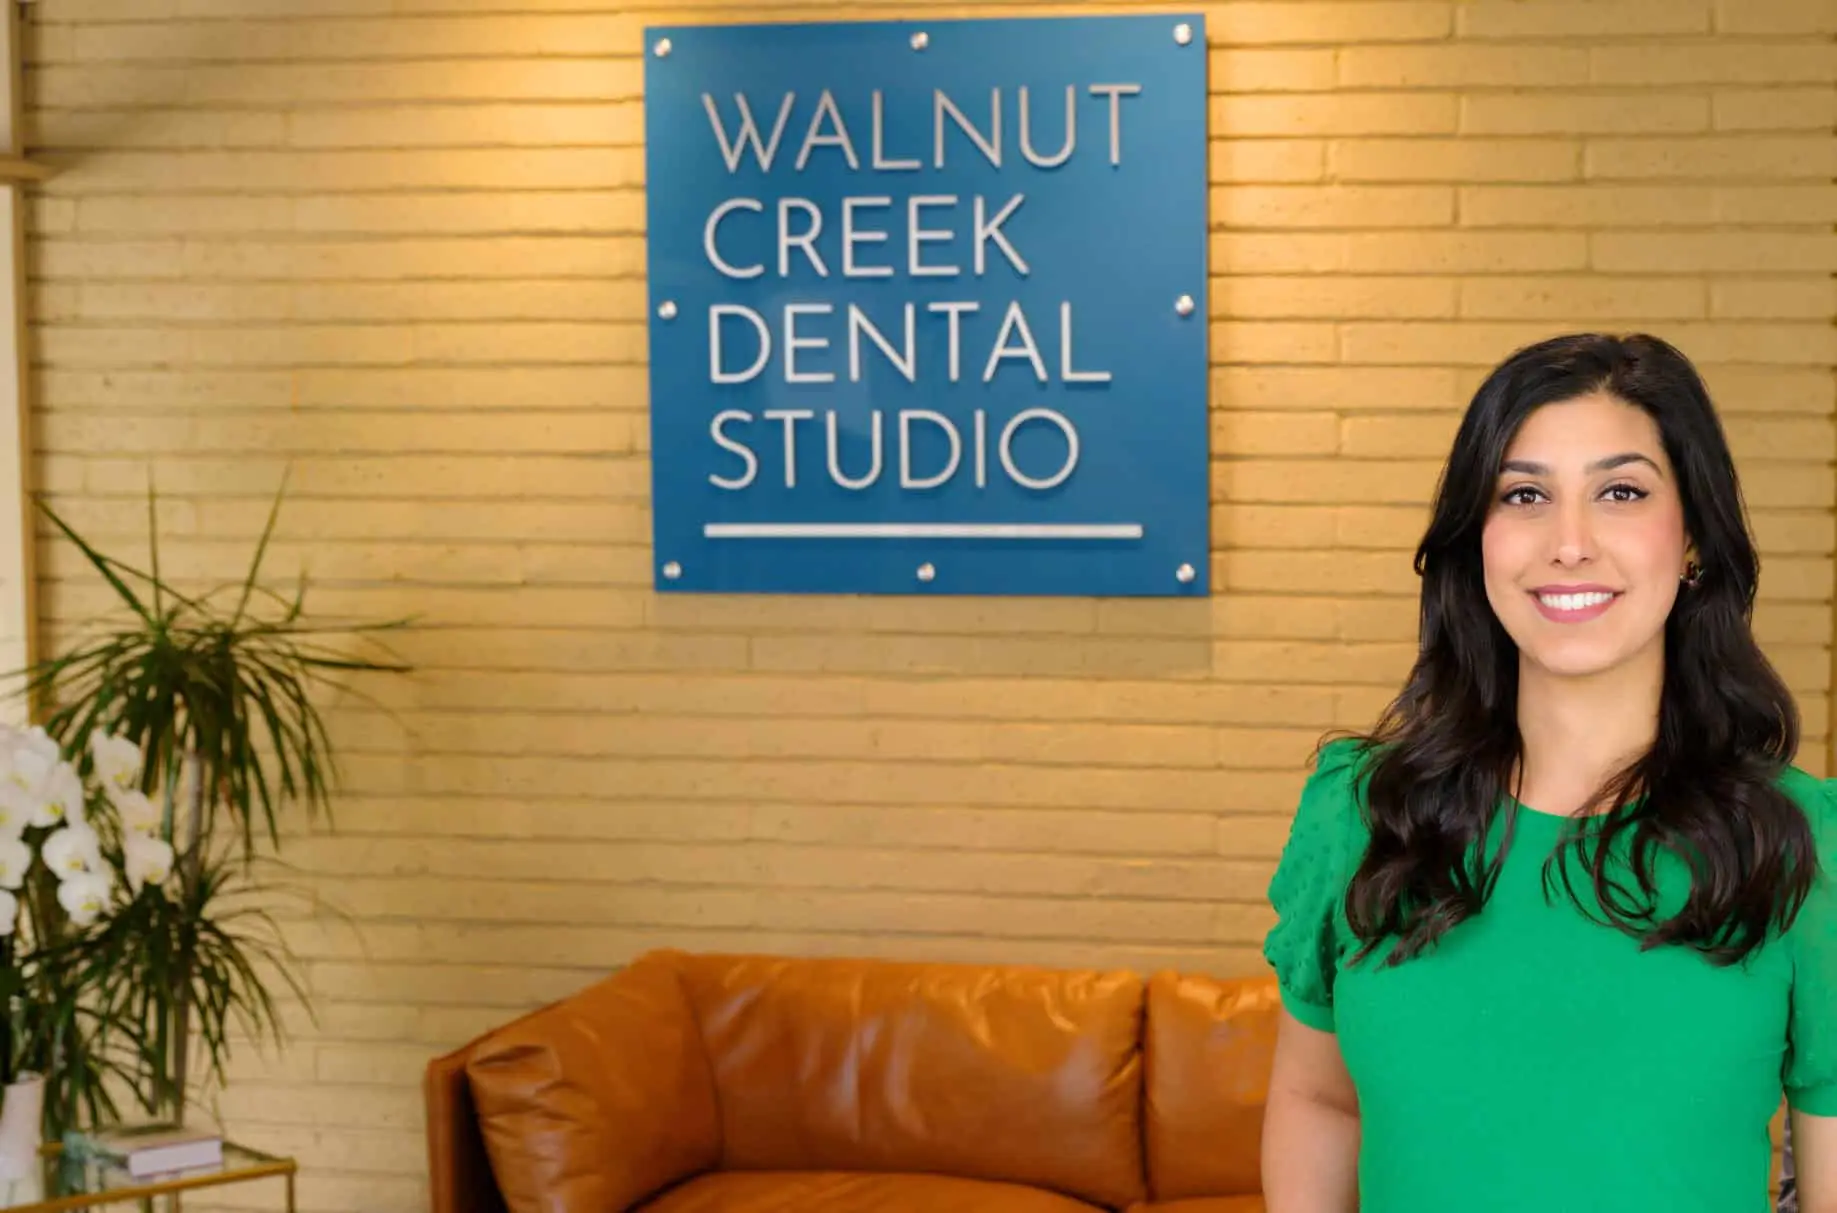 Dr. Sara Davidson is the Owner/Dentist at Walnut Creek Dental Studio